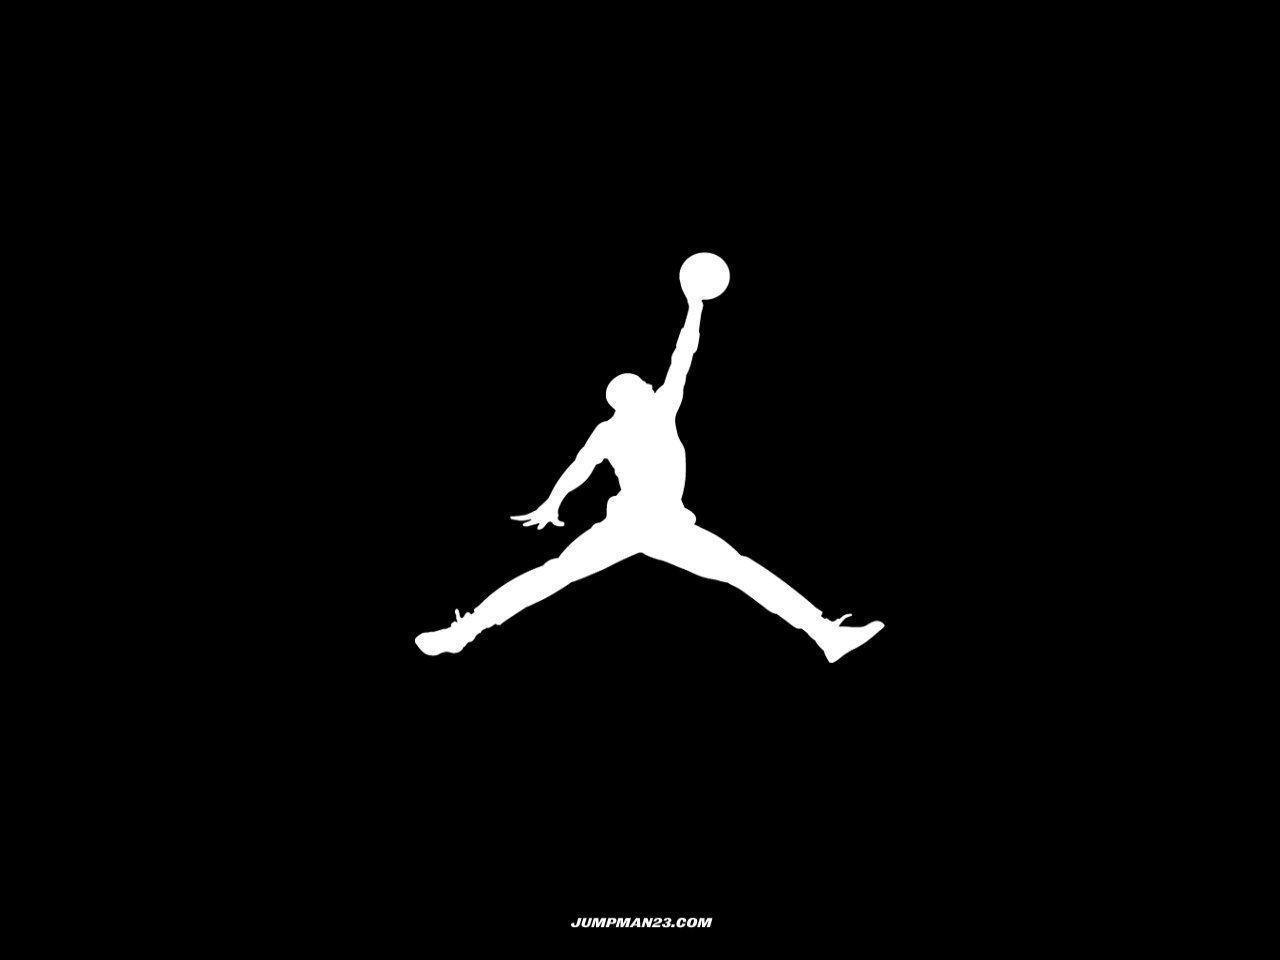 Sport Michael Jordan Wallpaper 02. hdwallpaper